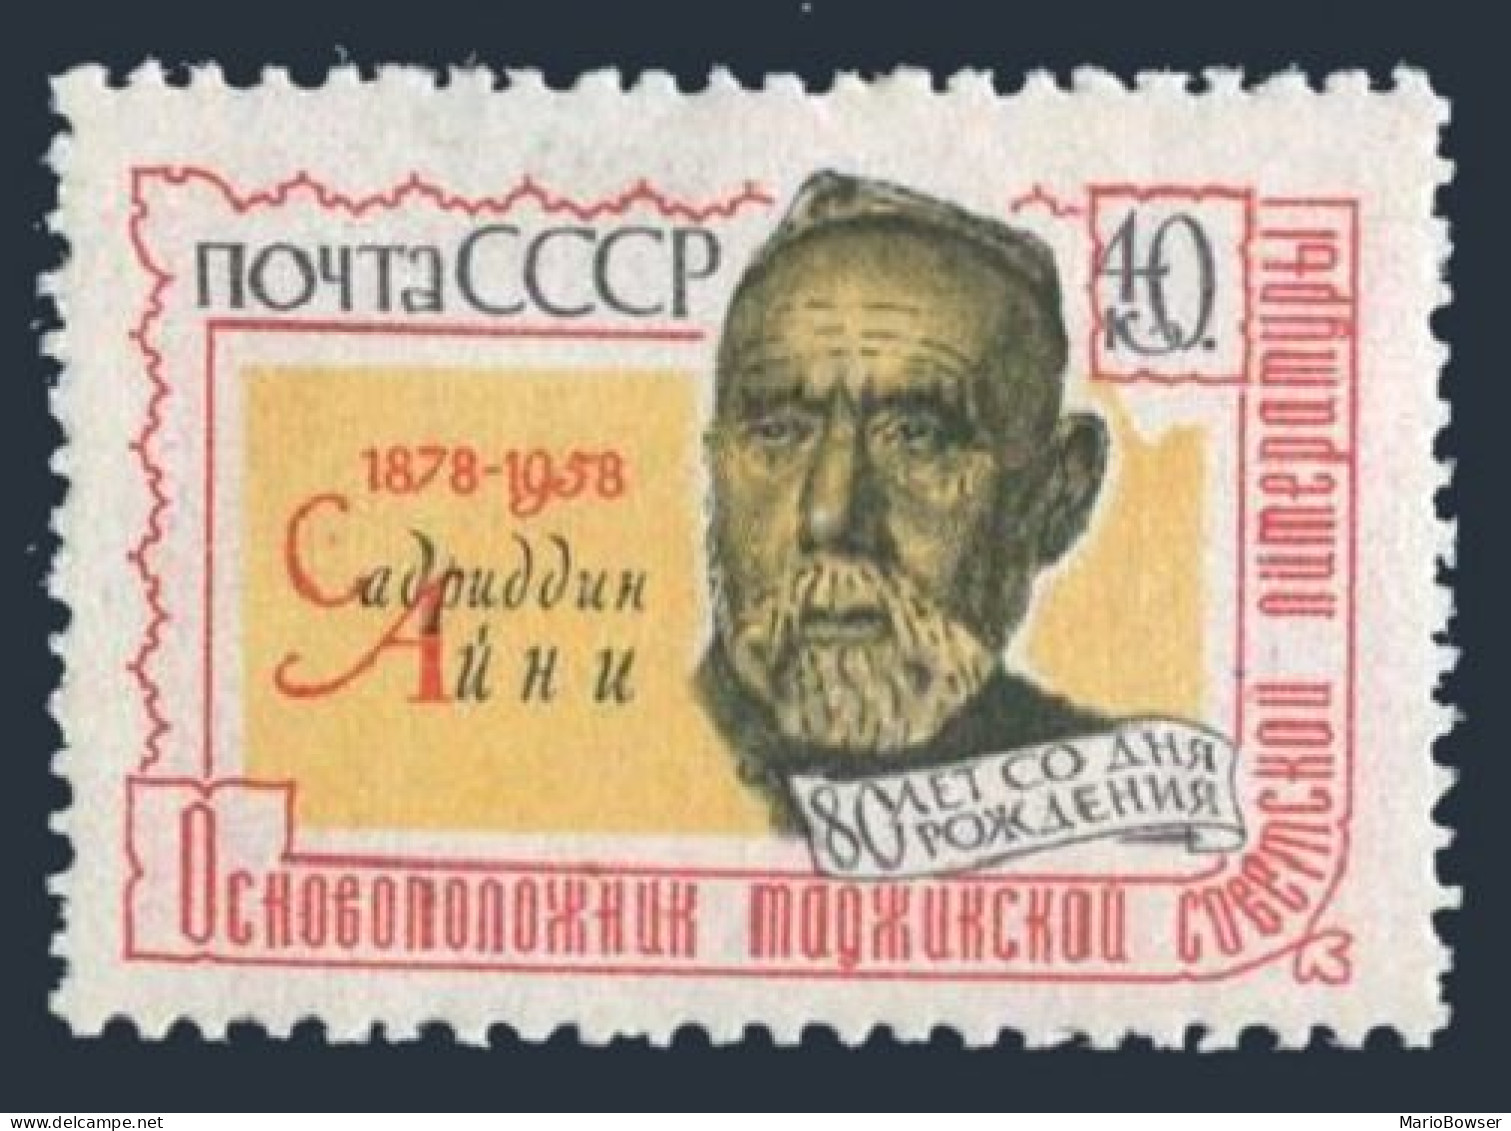 Russia 2084, MNH. Michel 2100. Sadriddin Aini, Tadzhik Writer, 1958. - Unused Stamps